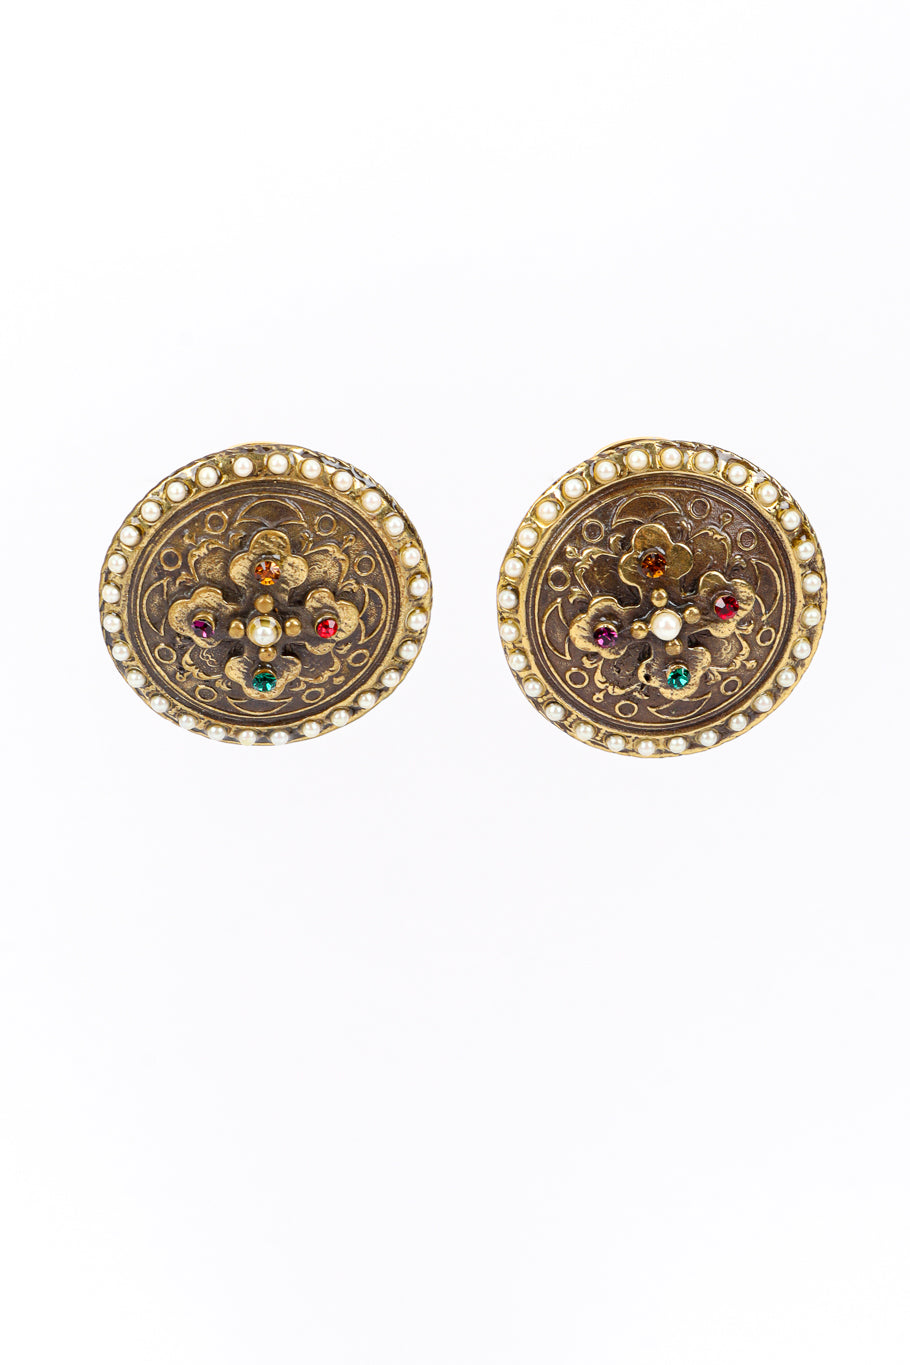 Vintage Il Gioiello Medallion Necklace, Bracelet and Earring Set earrings front @recess la